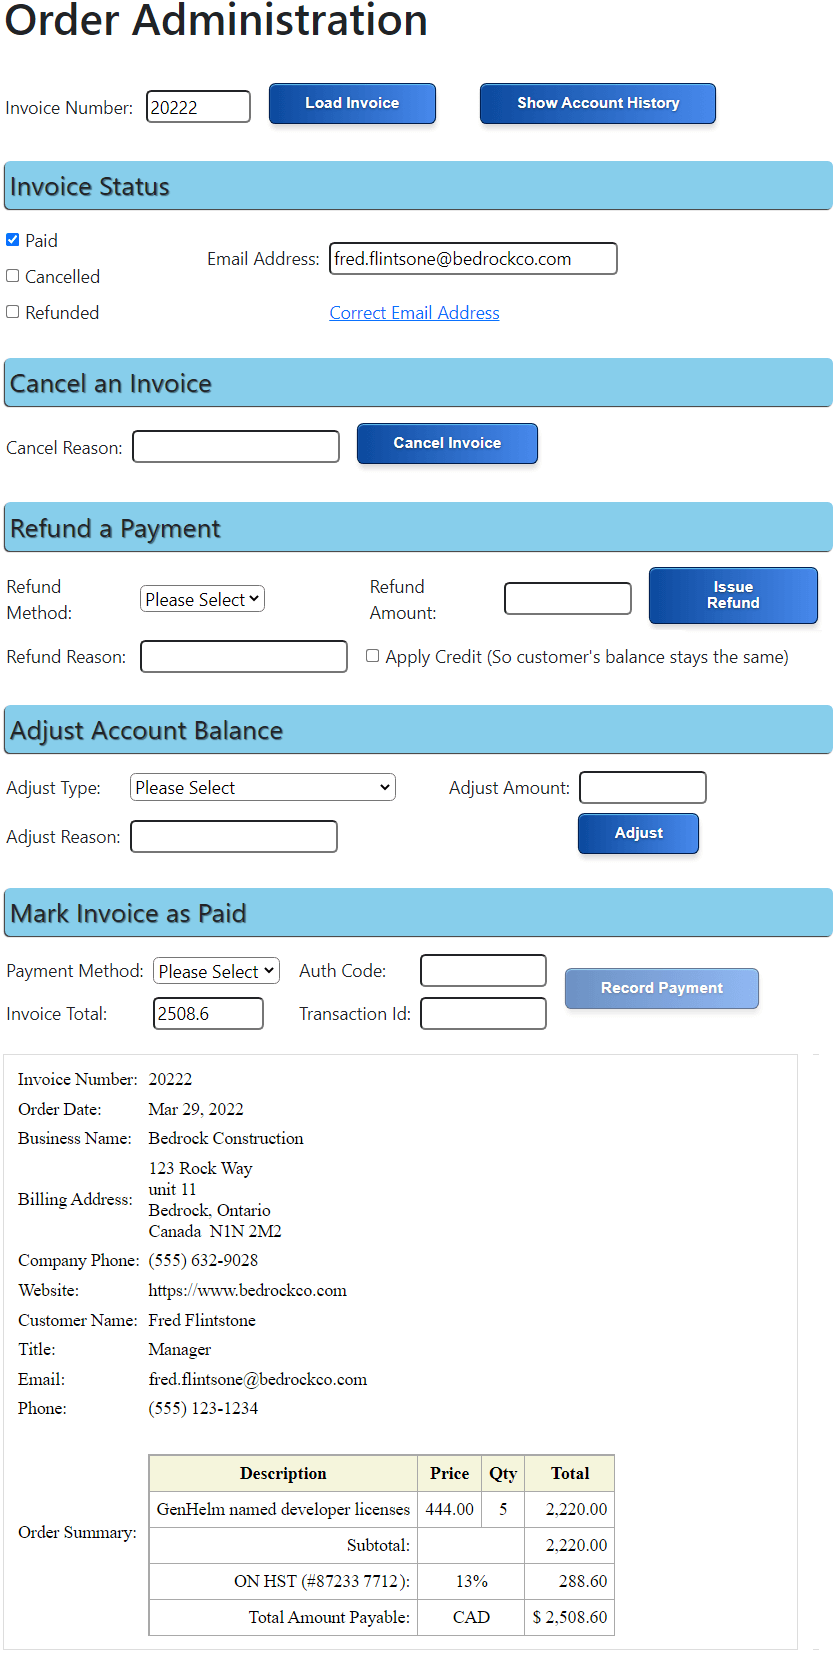 Sample Order Admin page